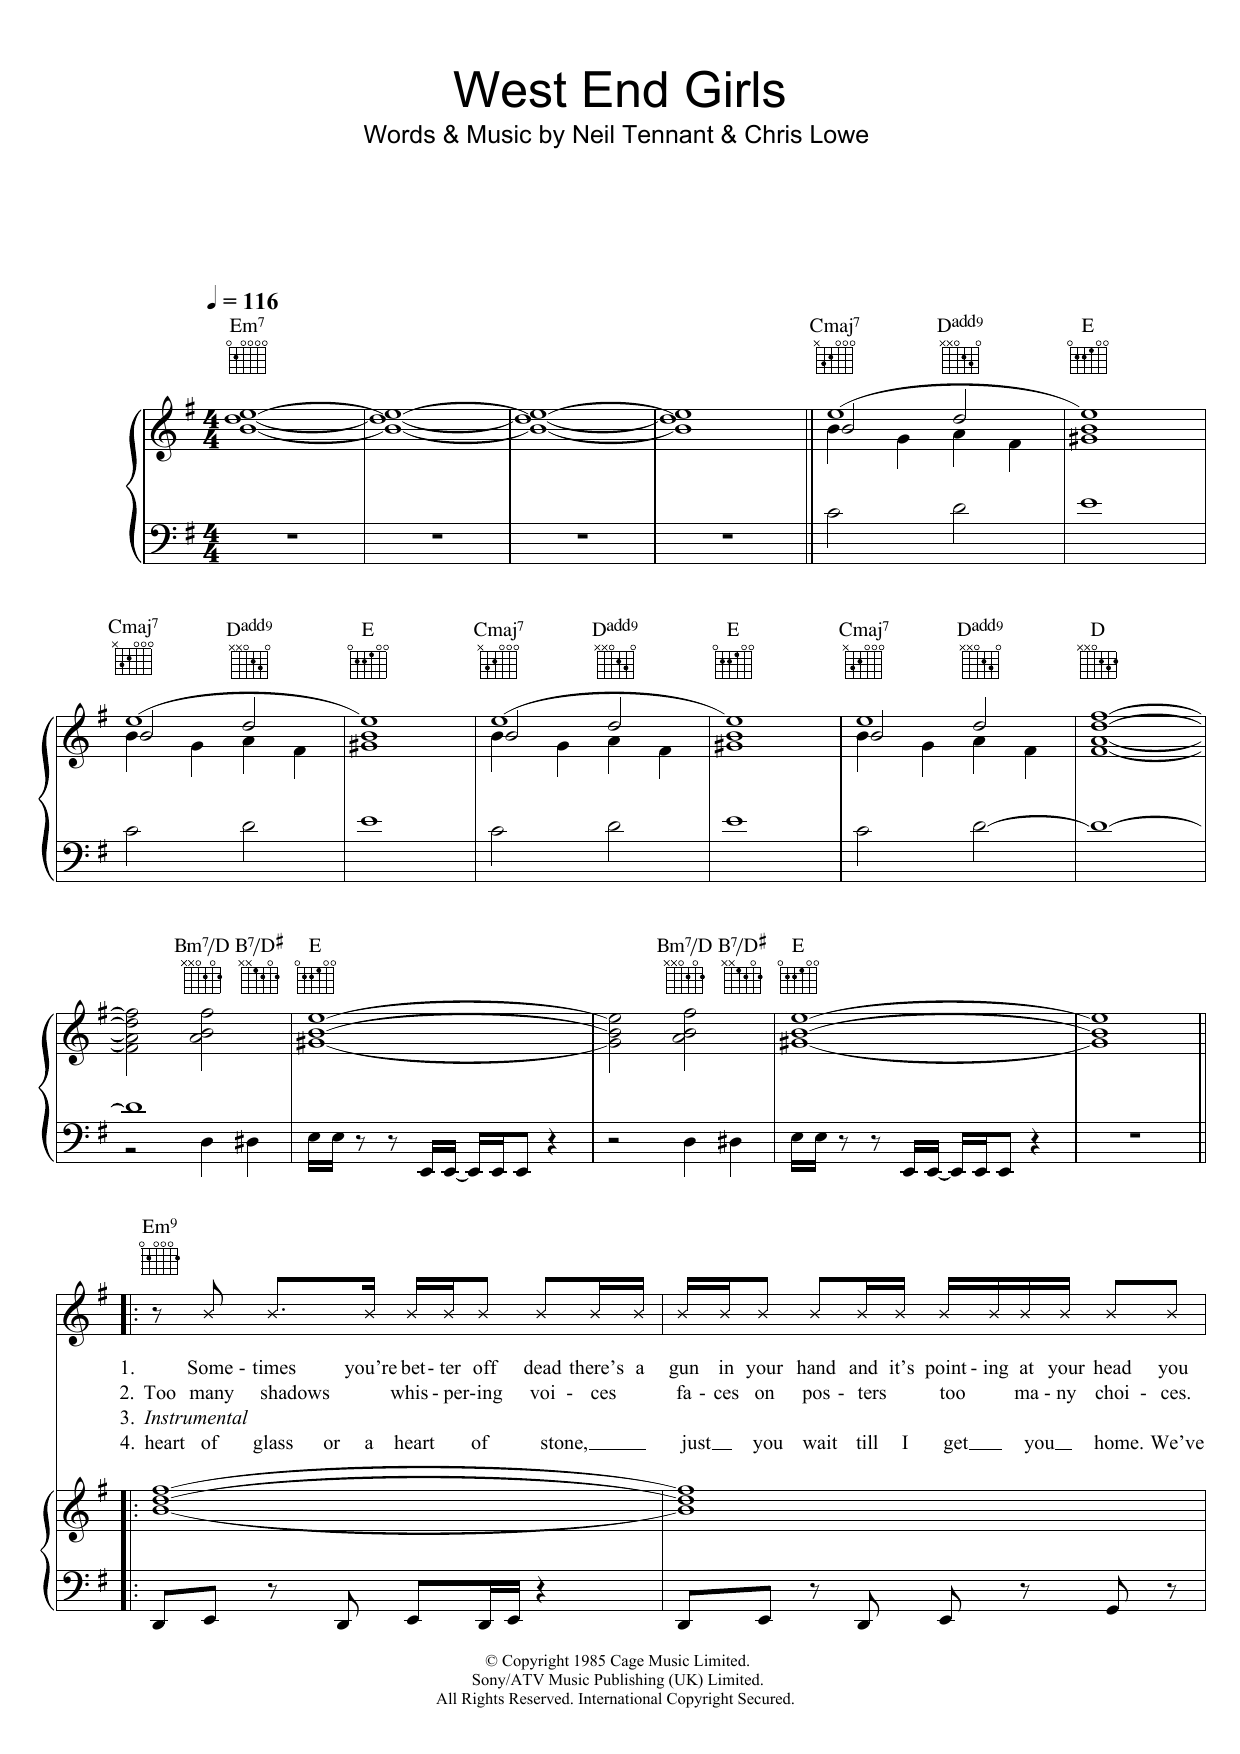 Pet Shop Boys West End Girls Sheet Music Notes & Chords for Guitar Chords/Lyrics - Download or Print PDF